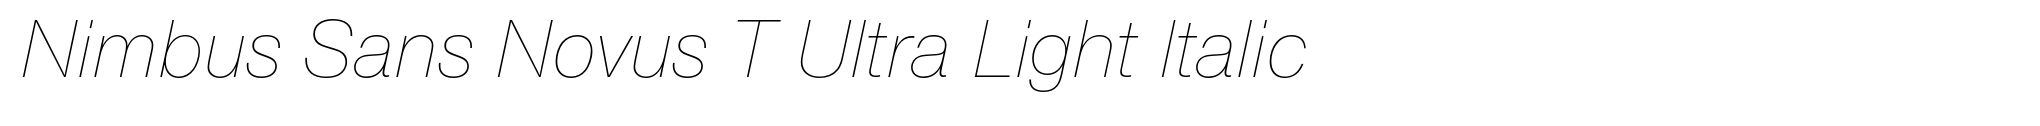 Nimbus Sans Novus T Ultra Light Italic image